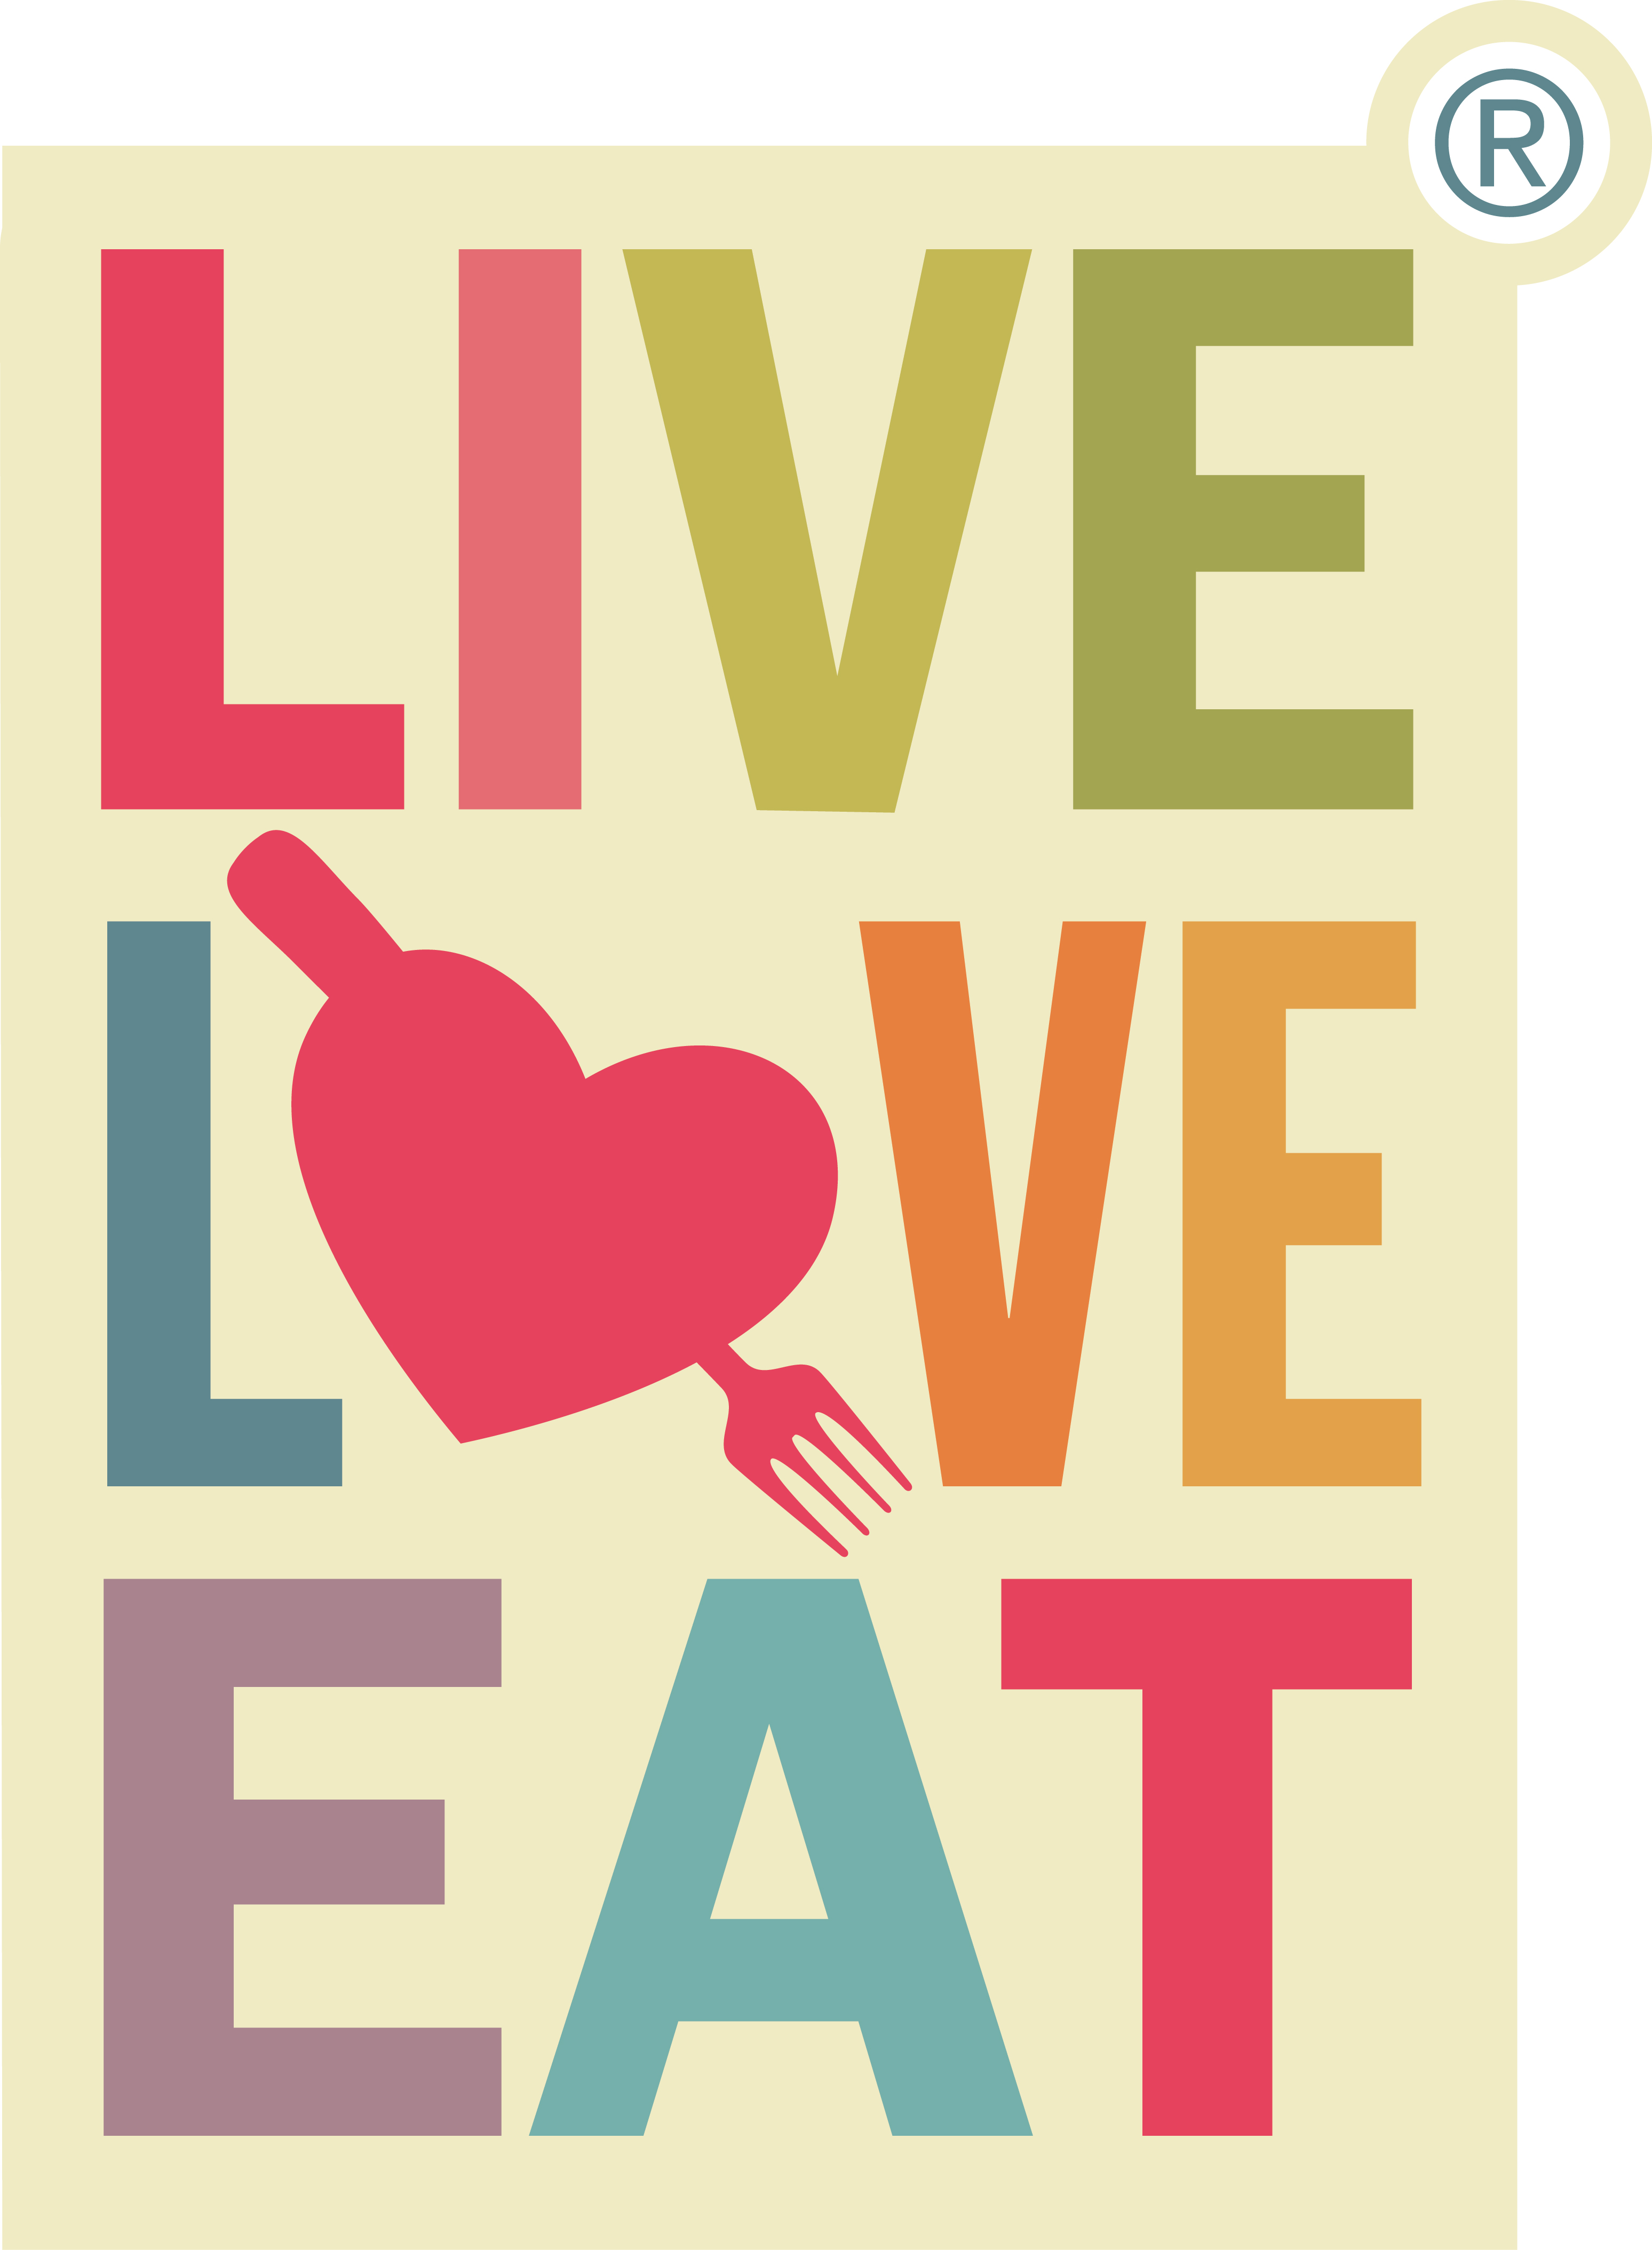 We eat перевод. I Love eat. Live Love eat. I Love to eat рисунок. Eat my логотип.